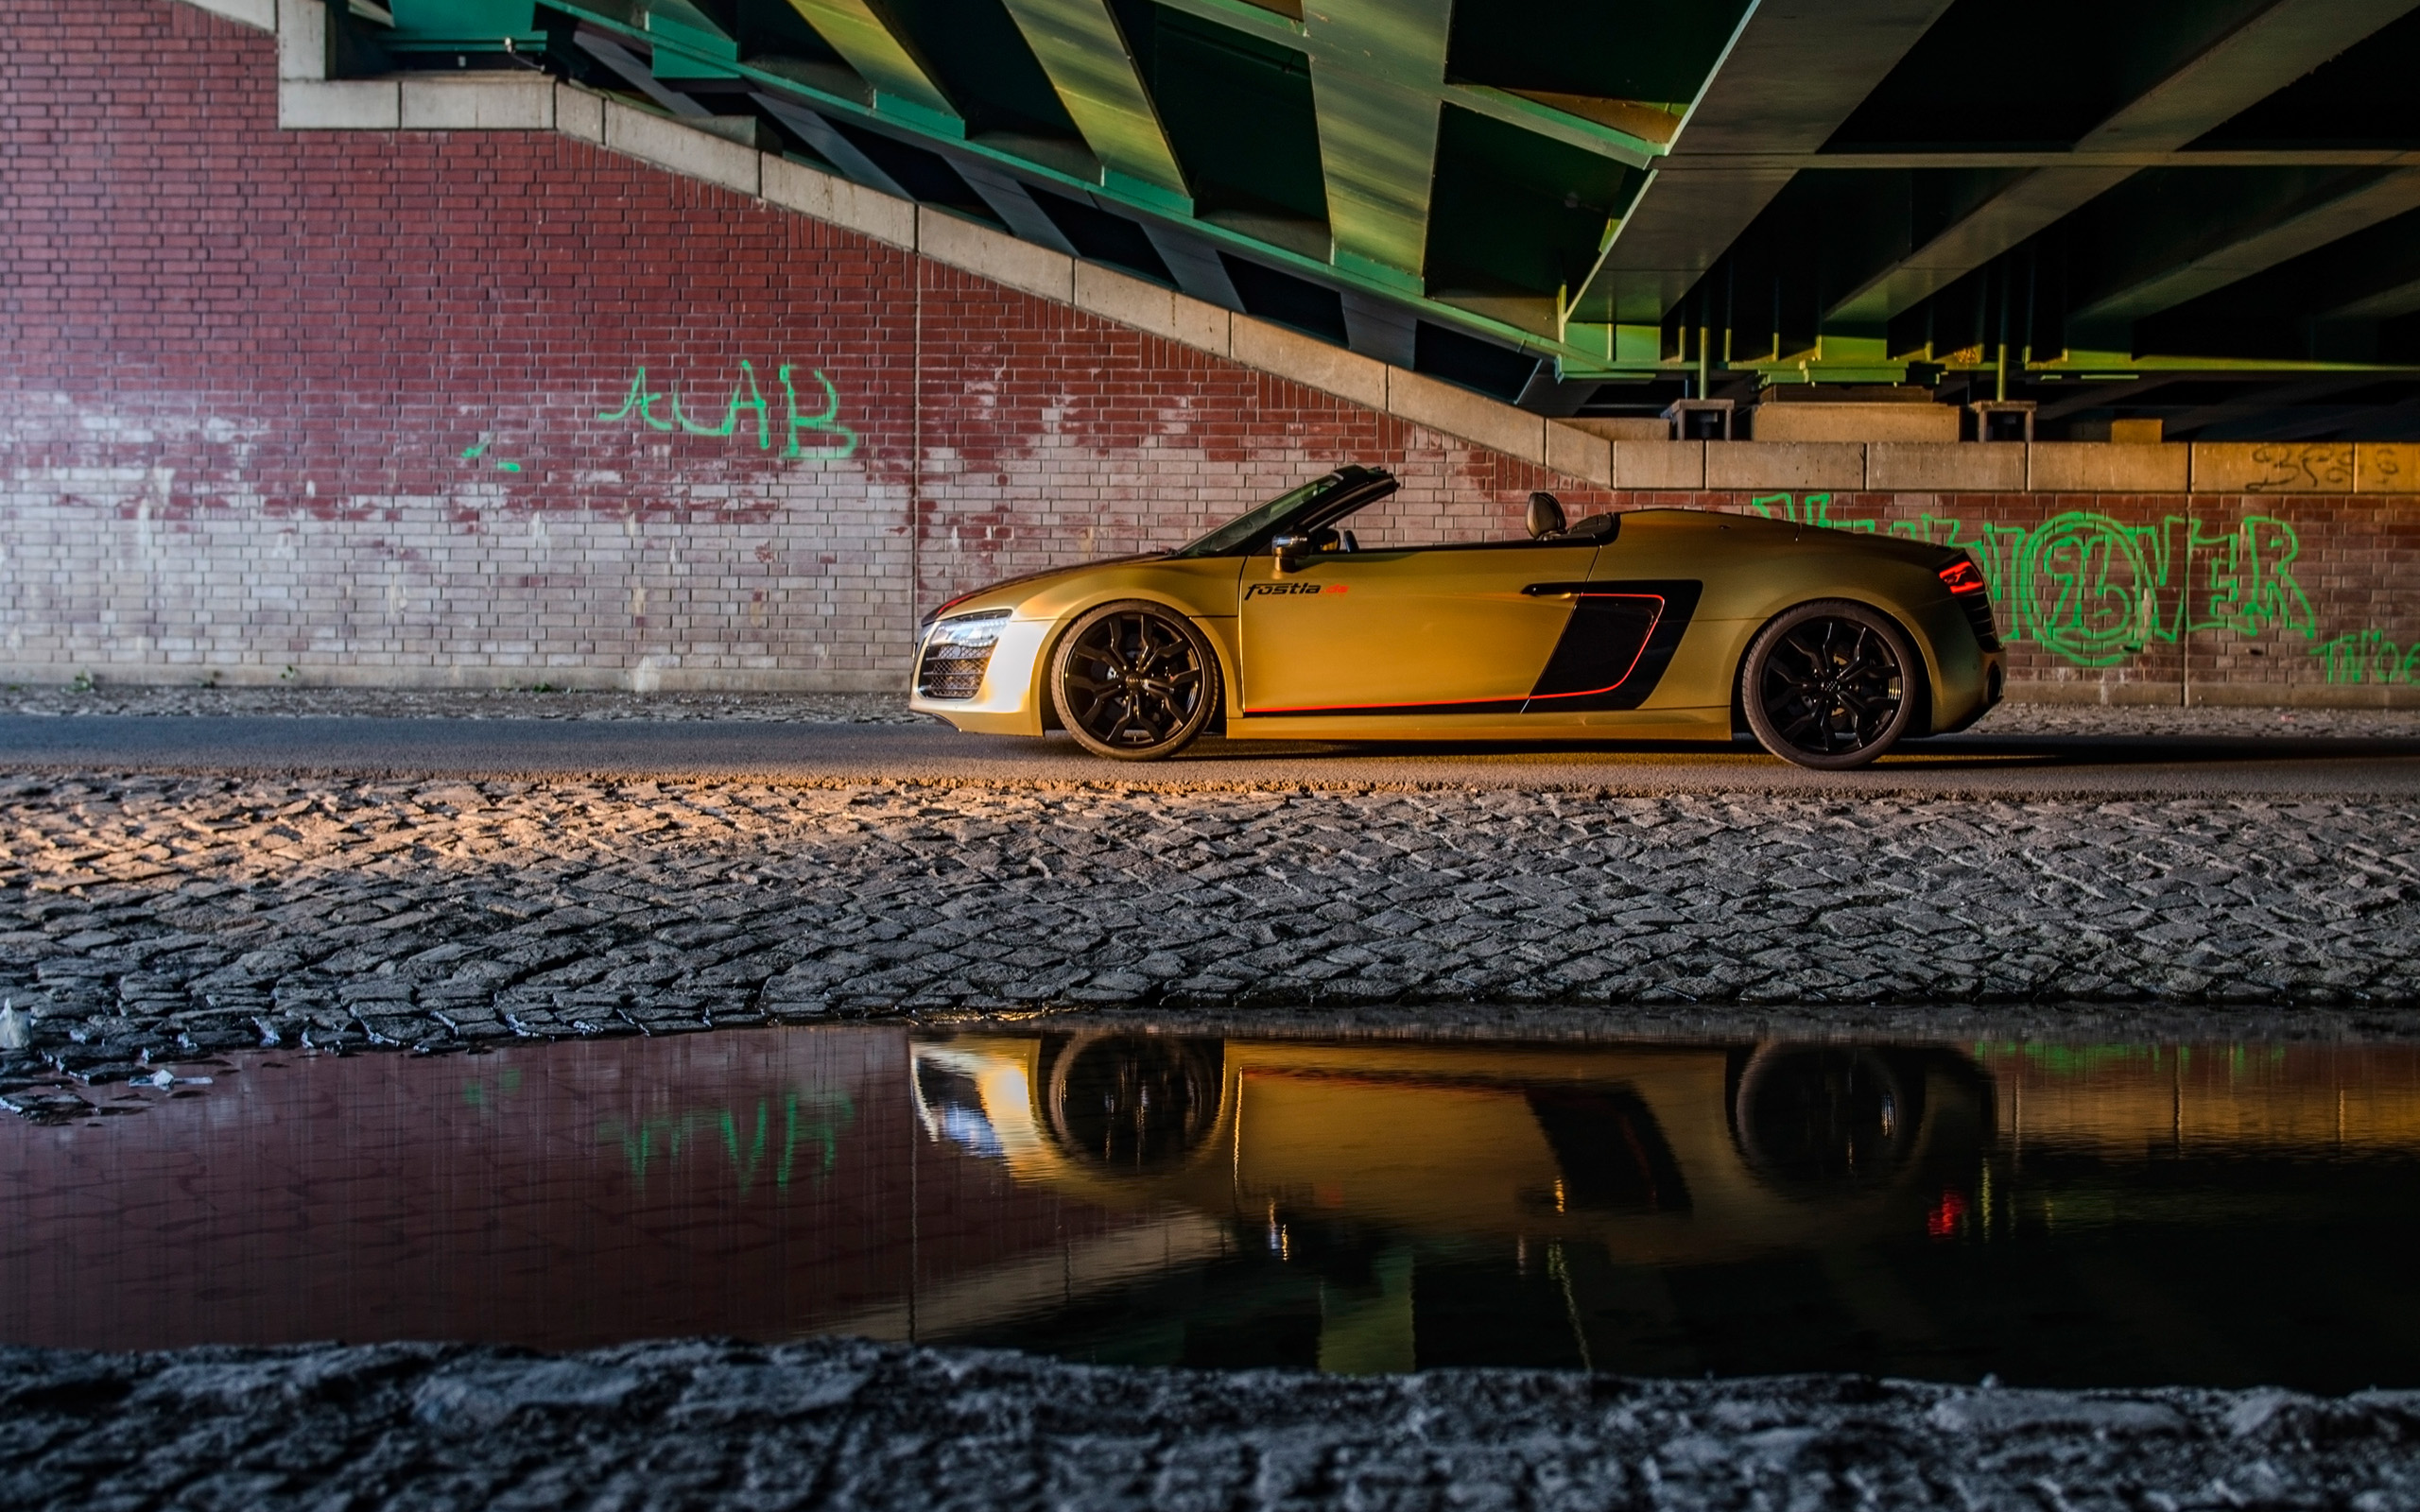 Vehicles Audi R8 HD Wallpaper | Background Image